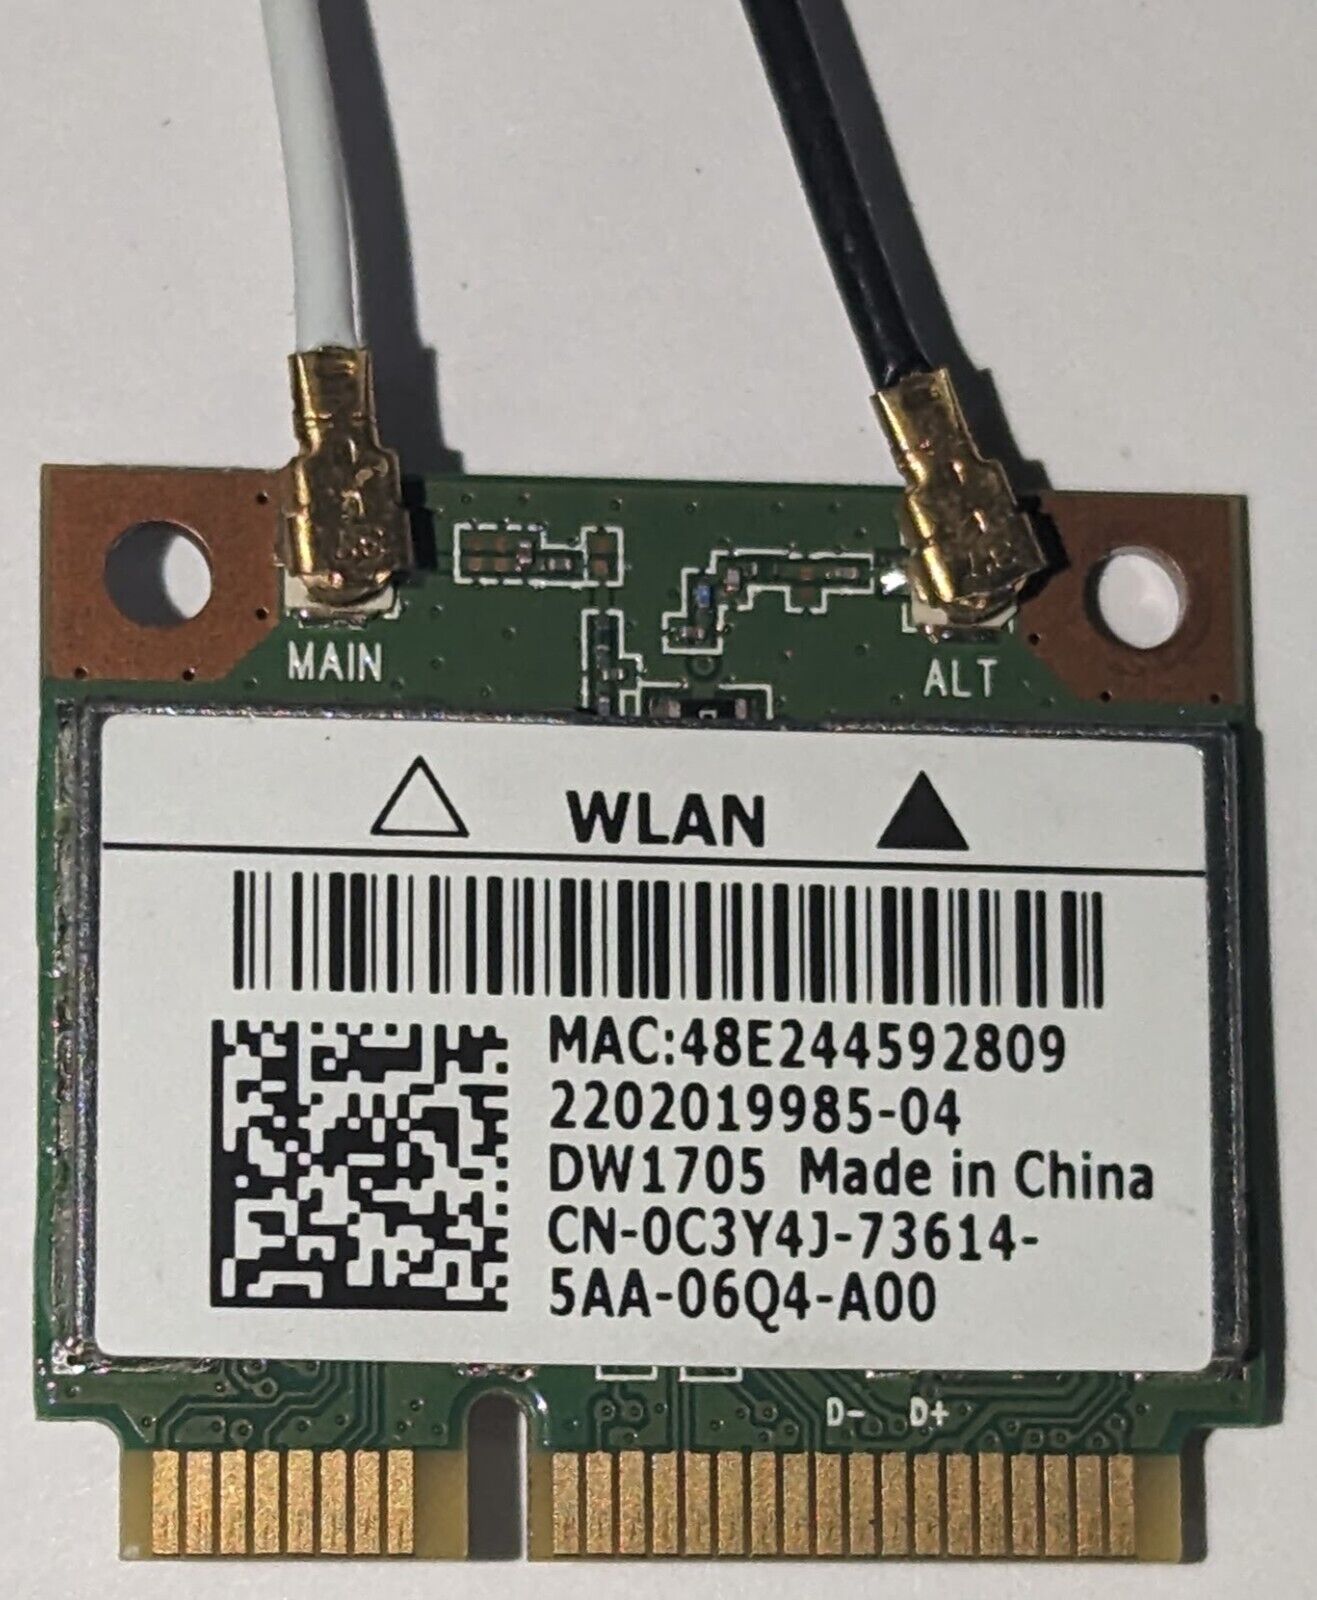 Dell Original DW1705 802.11n Wireless BT PCIe Half QCWB335 5GC50 